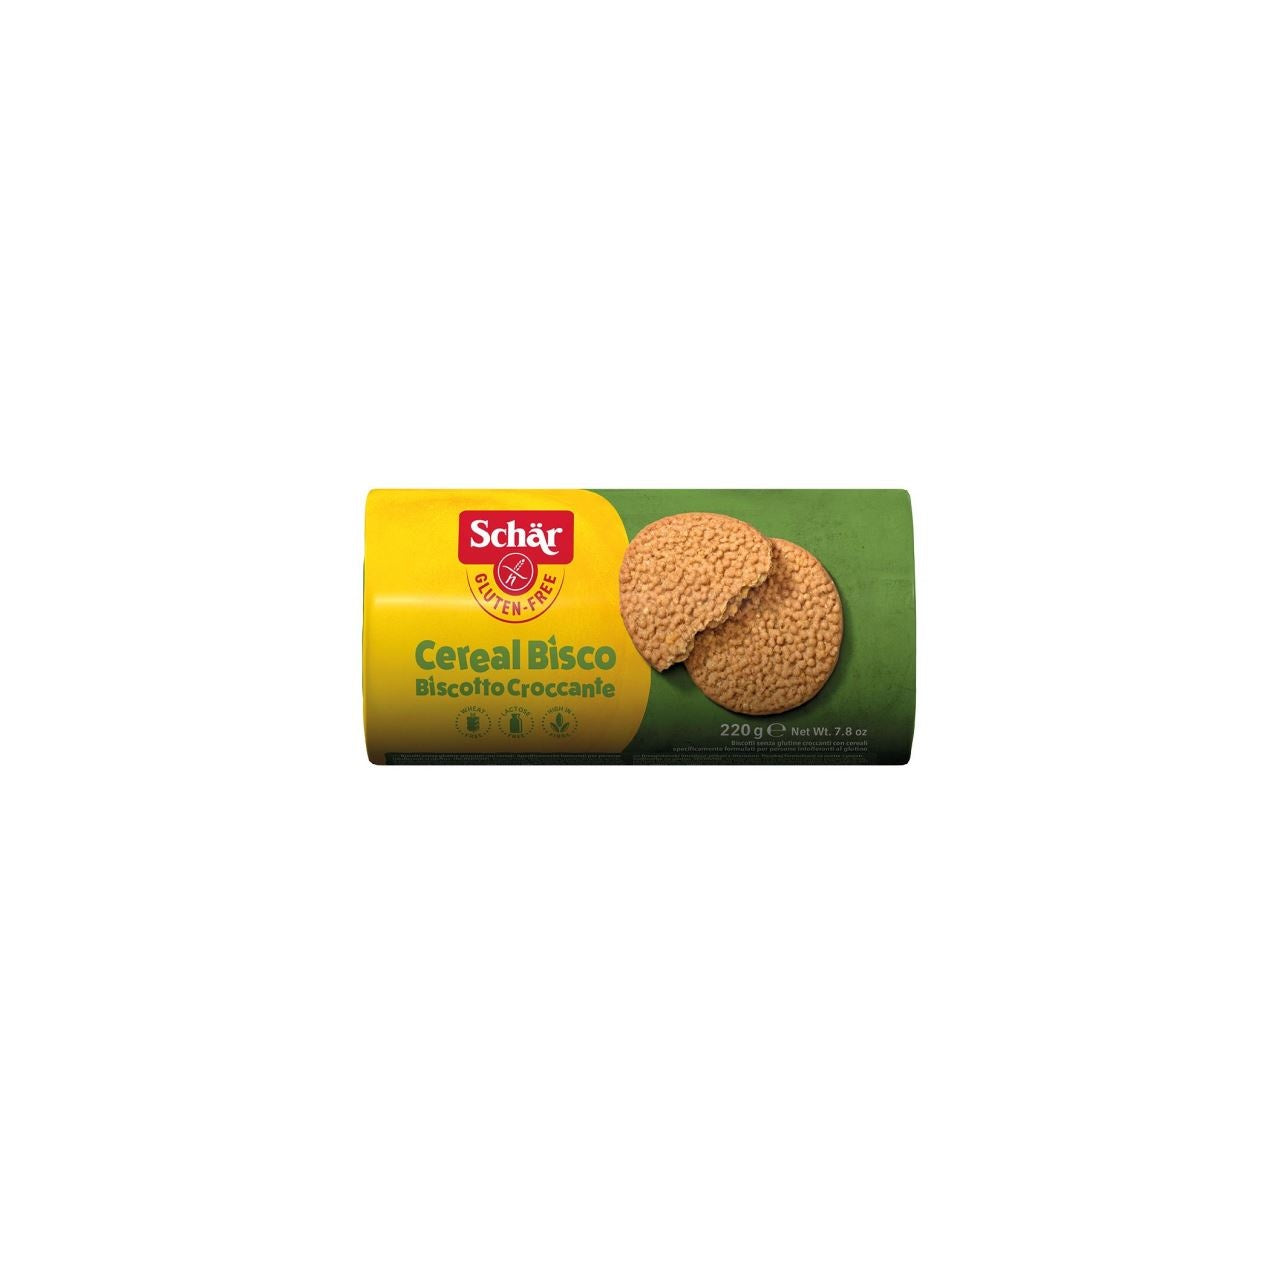 Biscuiti crocanti fara gluten Cereal Bisco 220gr Schar